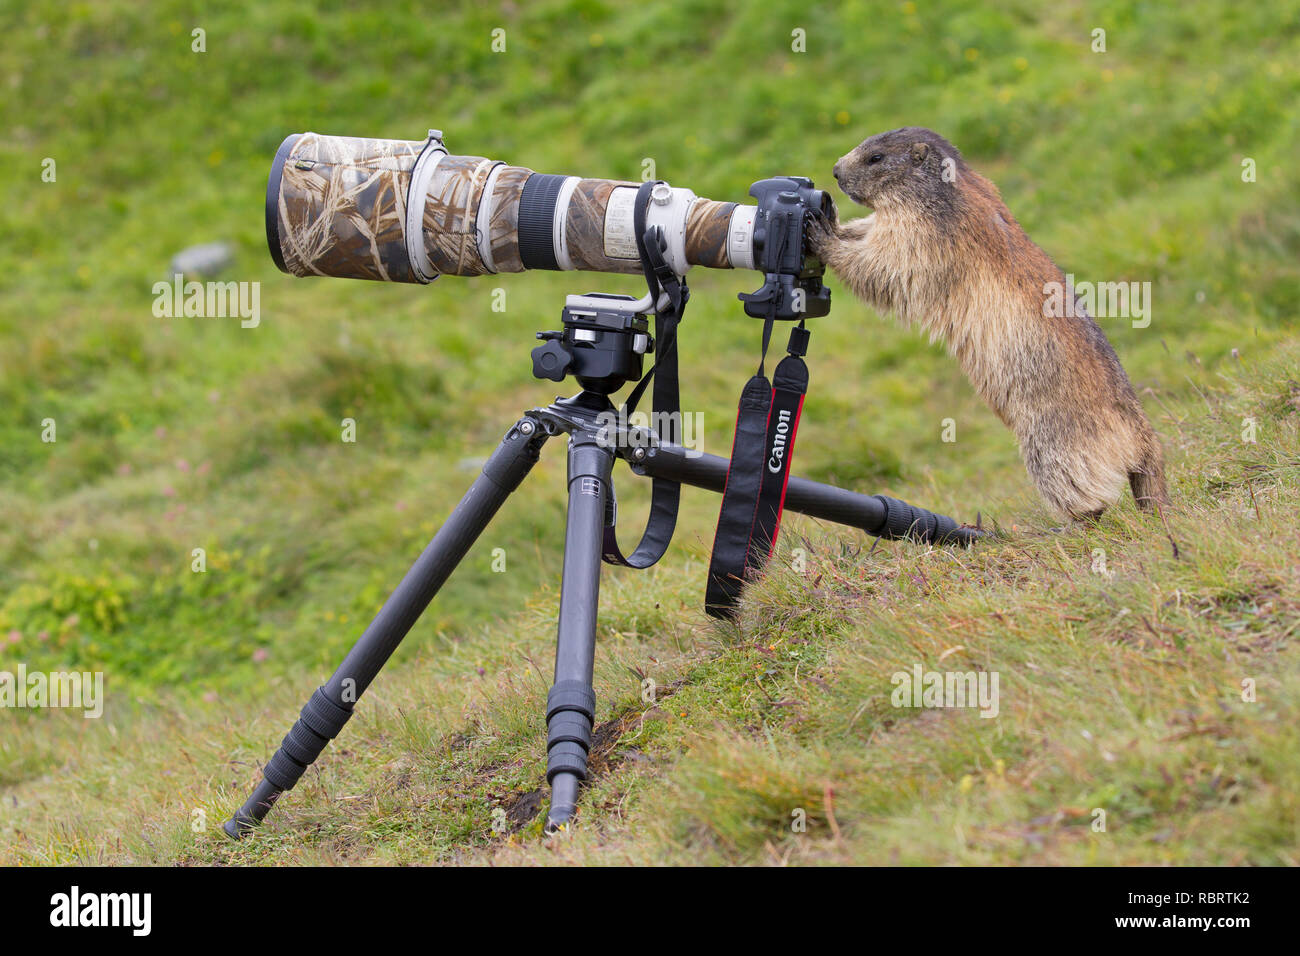 Neugierig Alpine Murmeltier (Marmota marmota) hinter Canon Kamera der Naturfotograf mit großen Teleobjektiv auf Stativ montiert Stockfoto